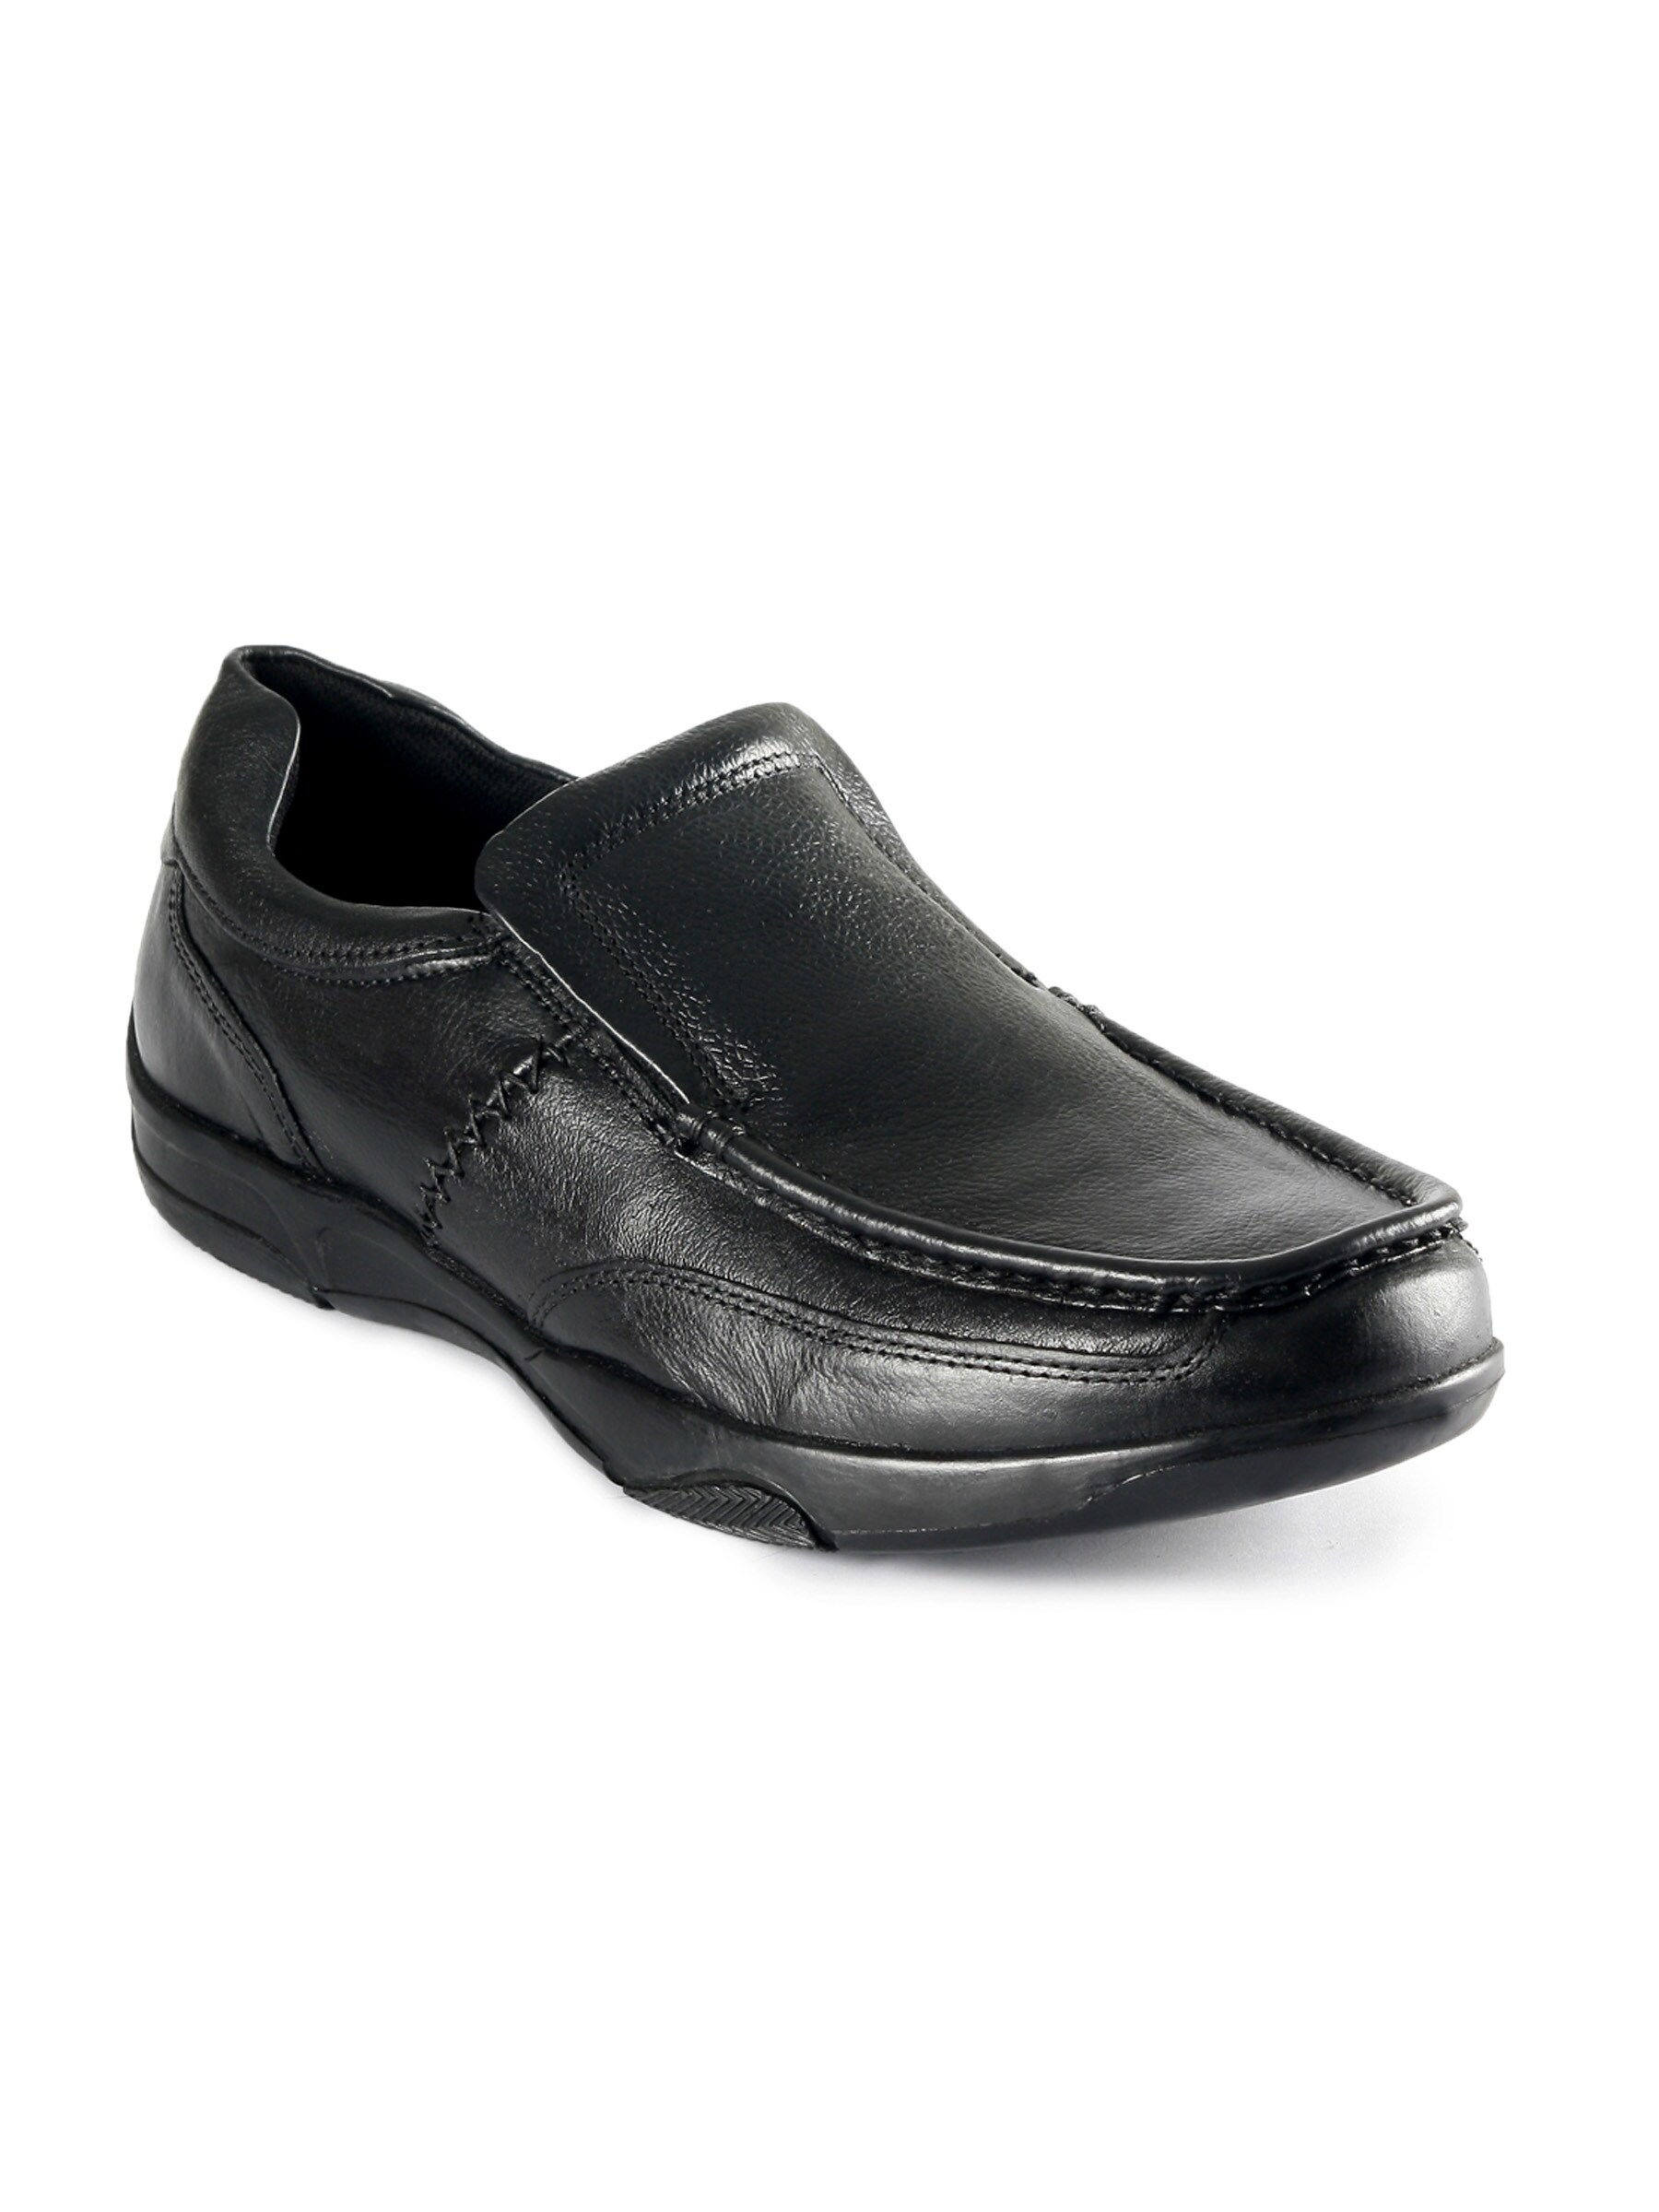 Redtape Men Margate Black Casual Shoe